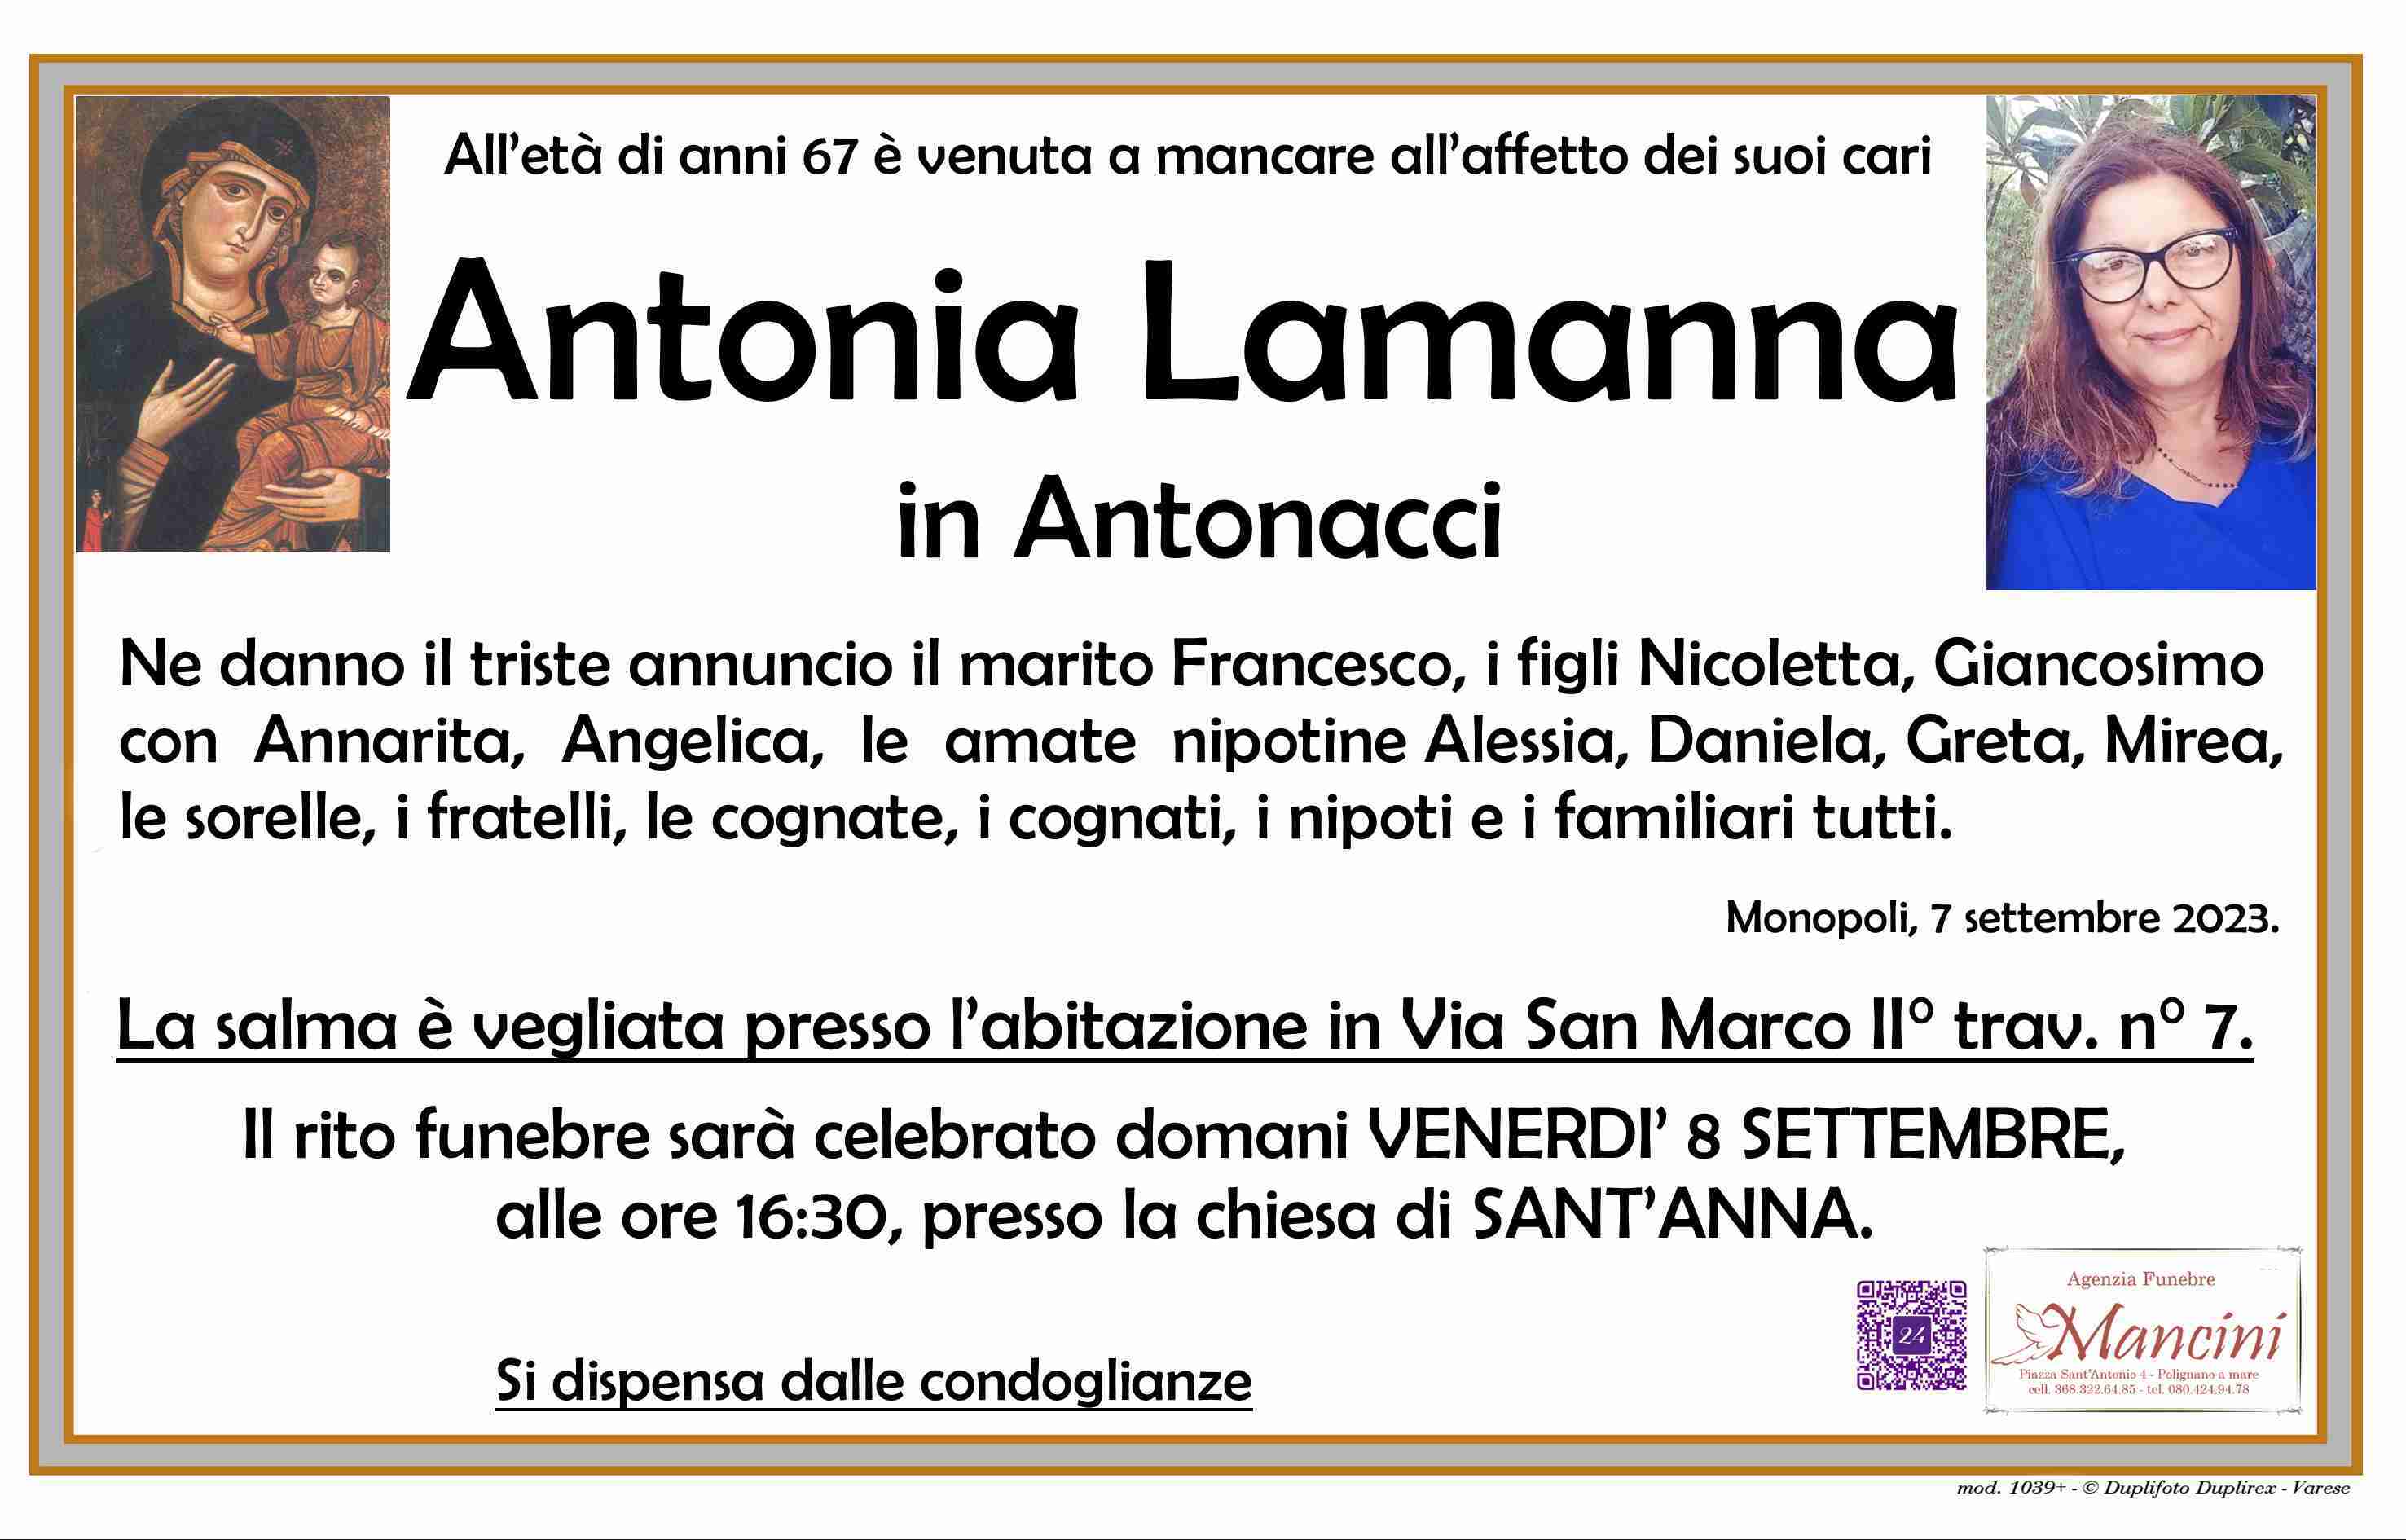 Antonia Lamanna